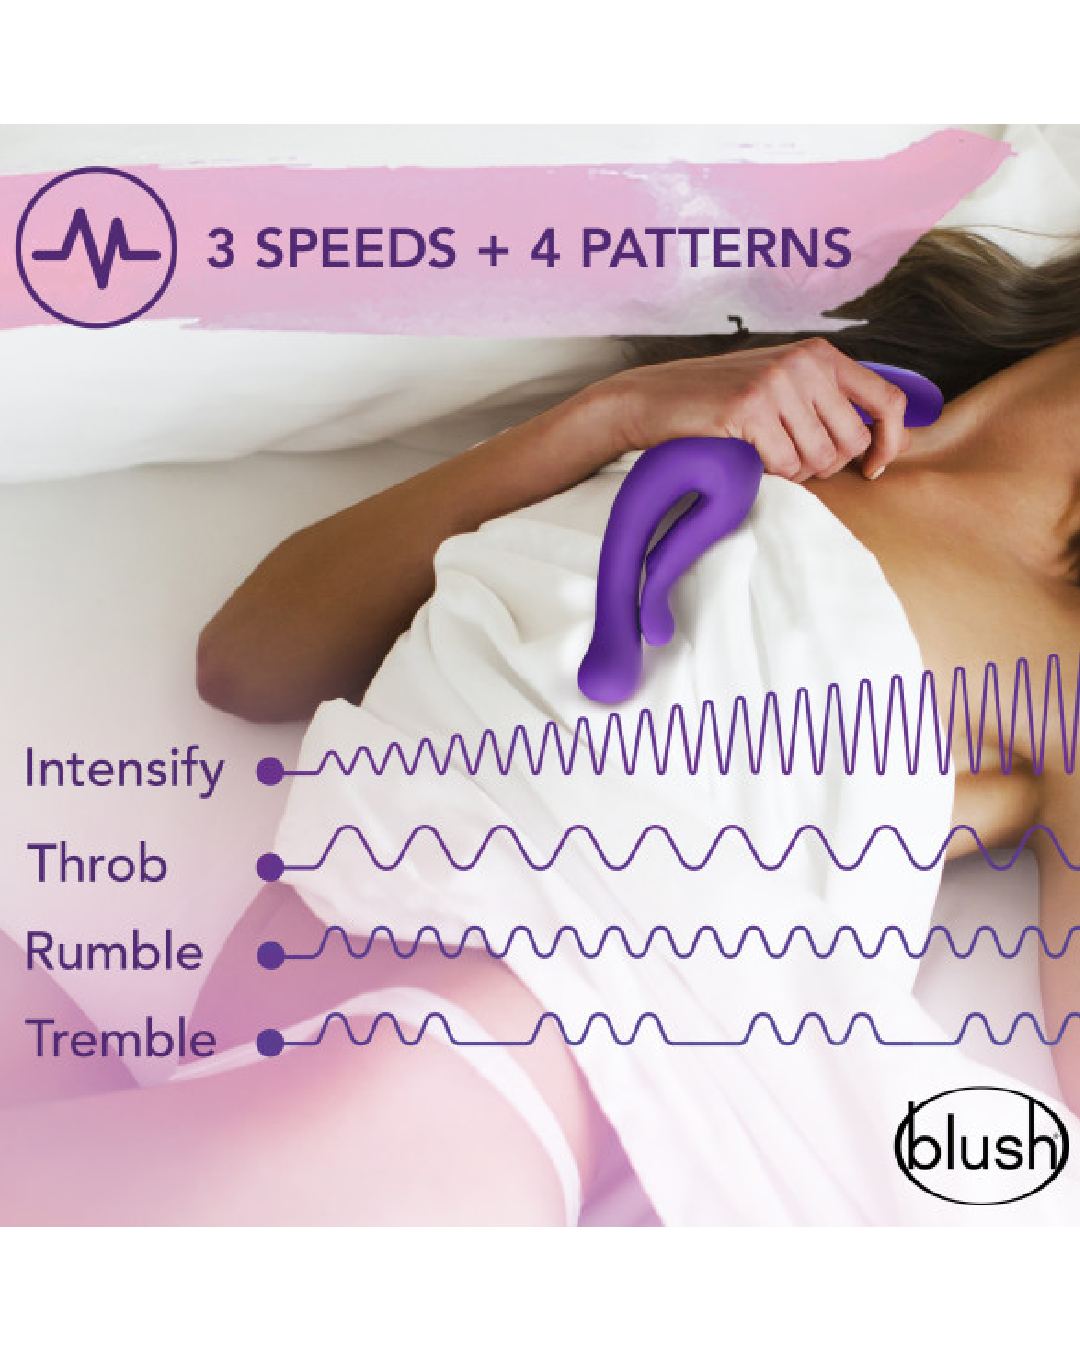 Wellness G Dual Stimulation Vibrator by Blush Novelties showing speeds and vibration 